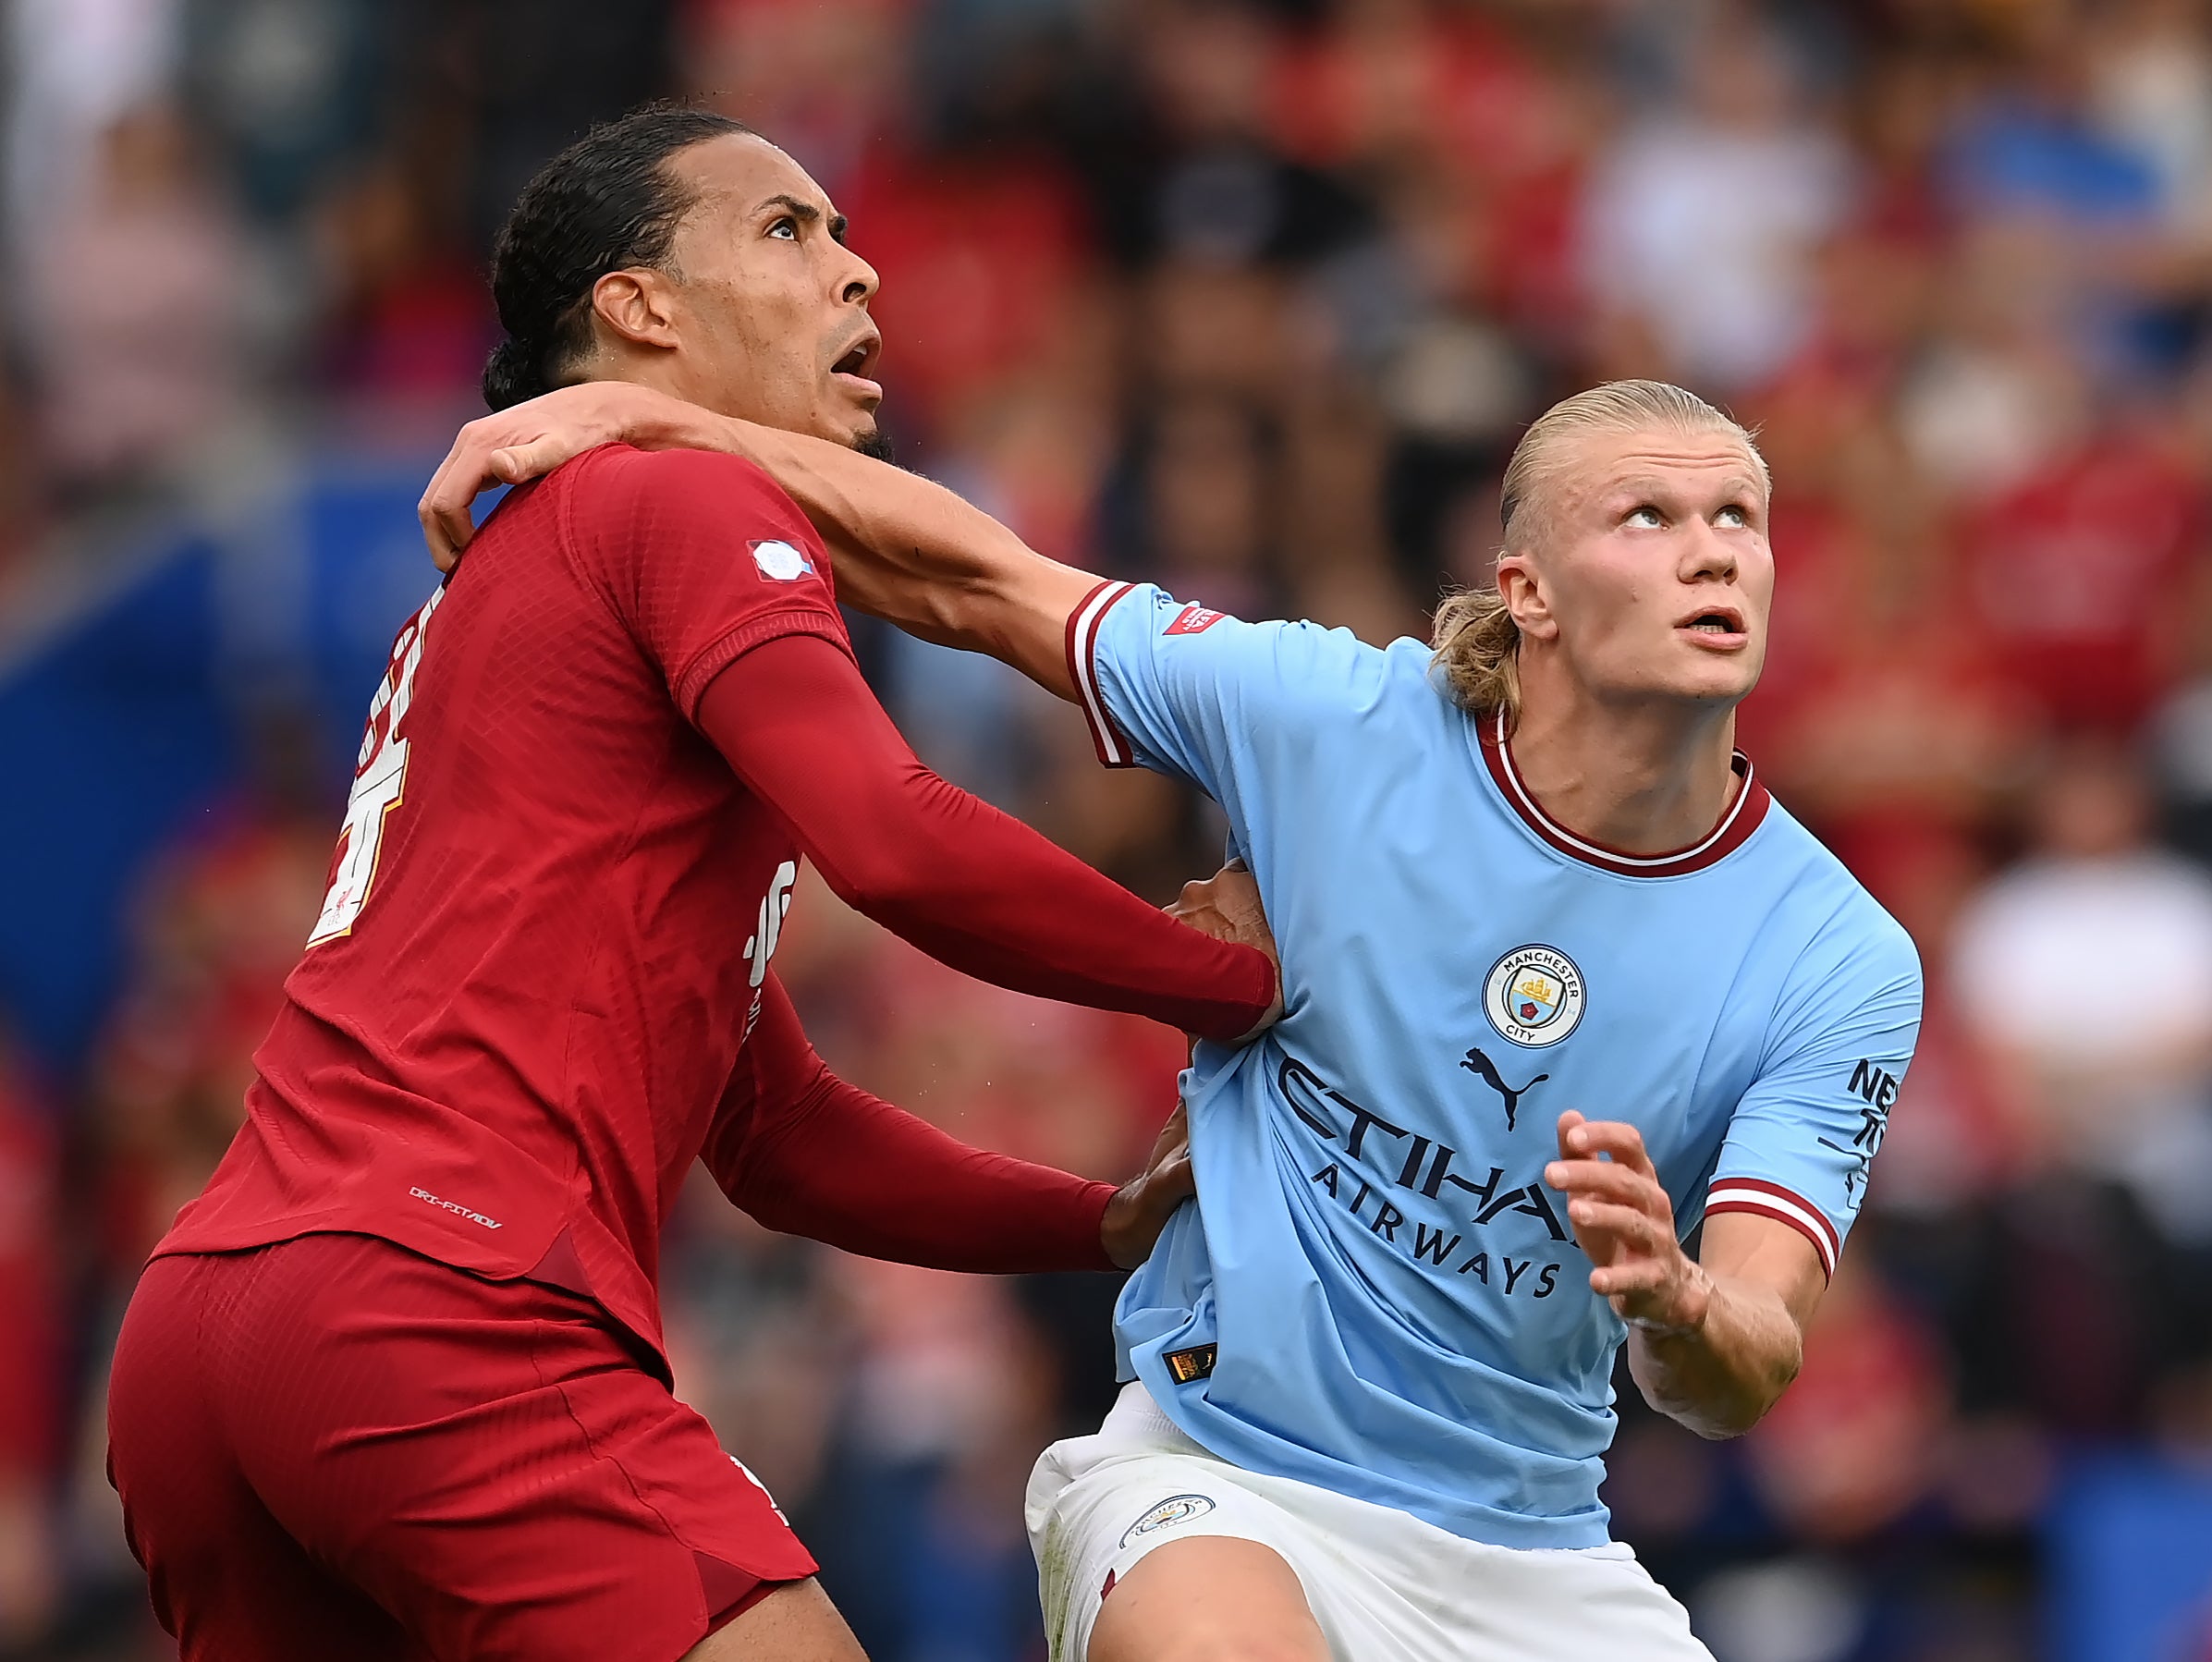 Liverpool defender Virgil van Dijk challenges for the ball with Manchester City striker Erling Haaland